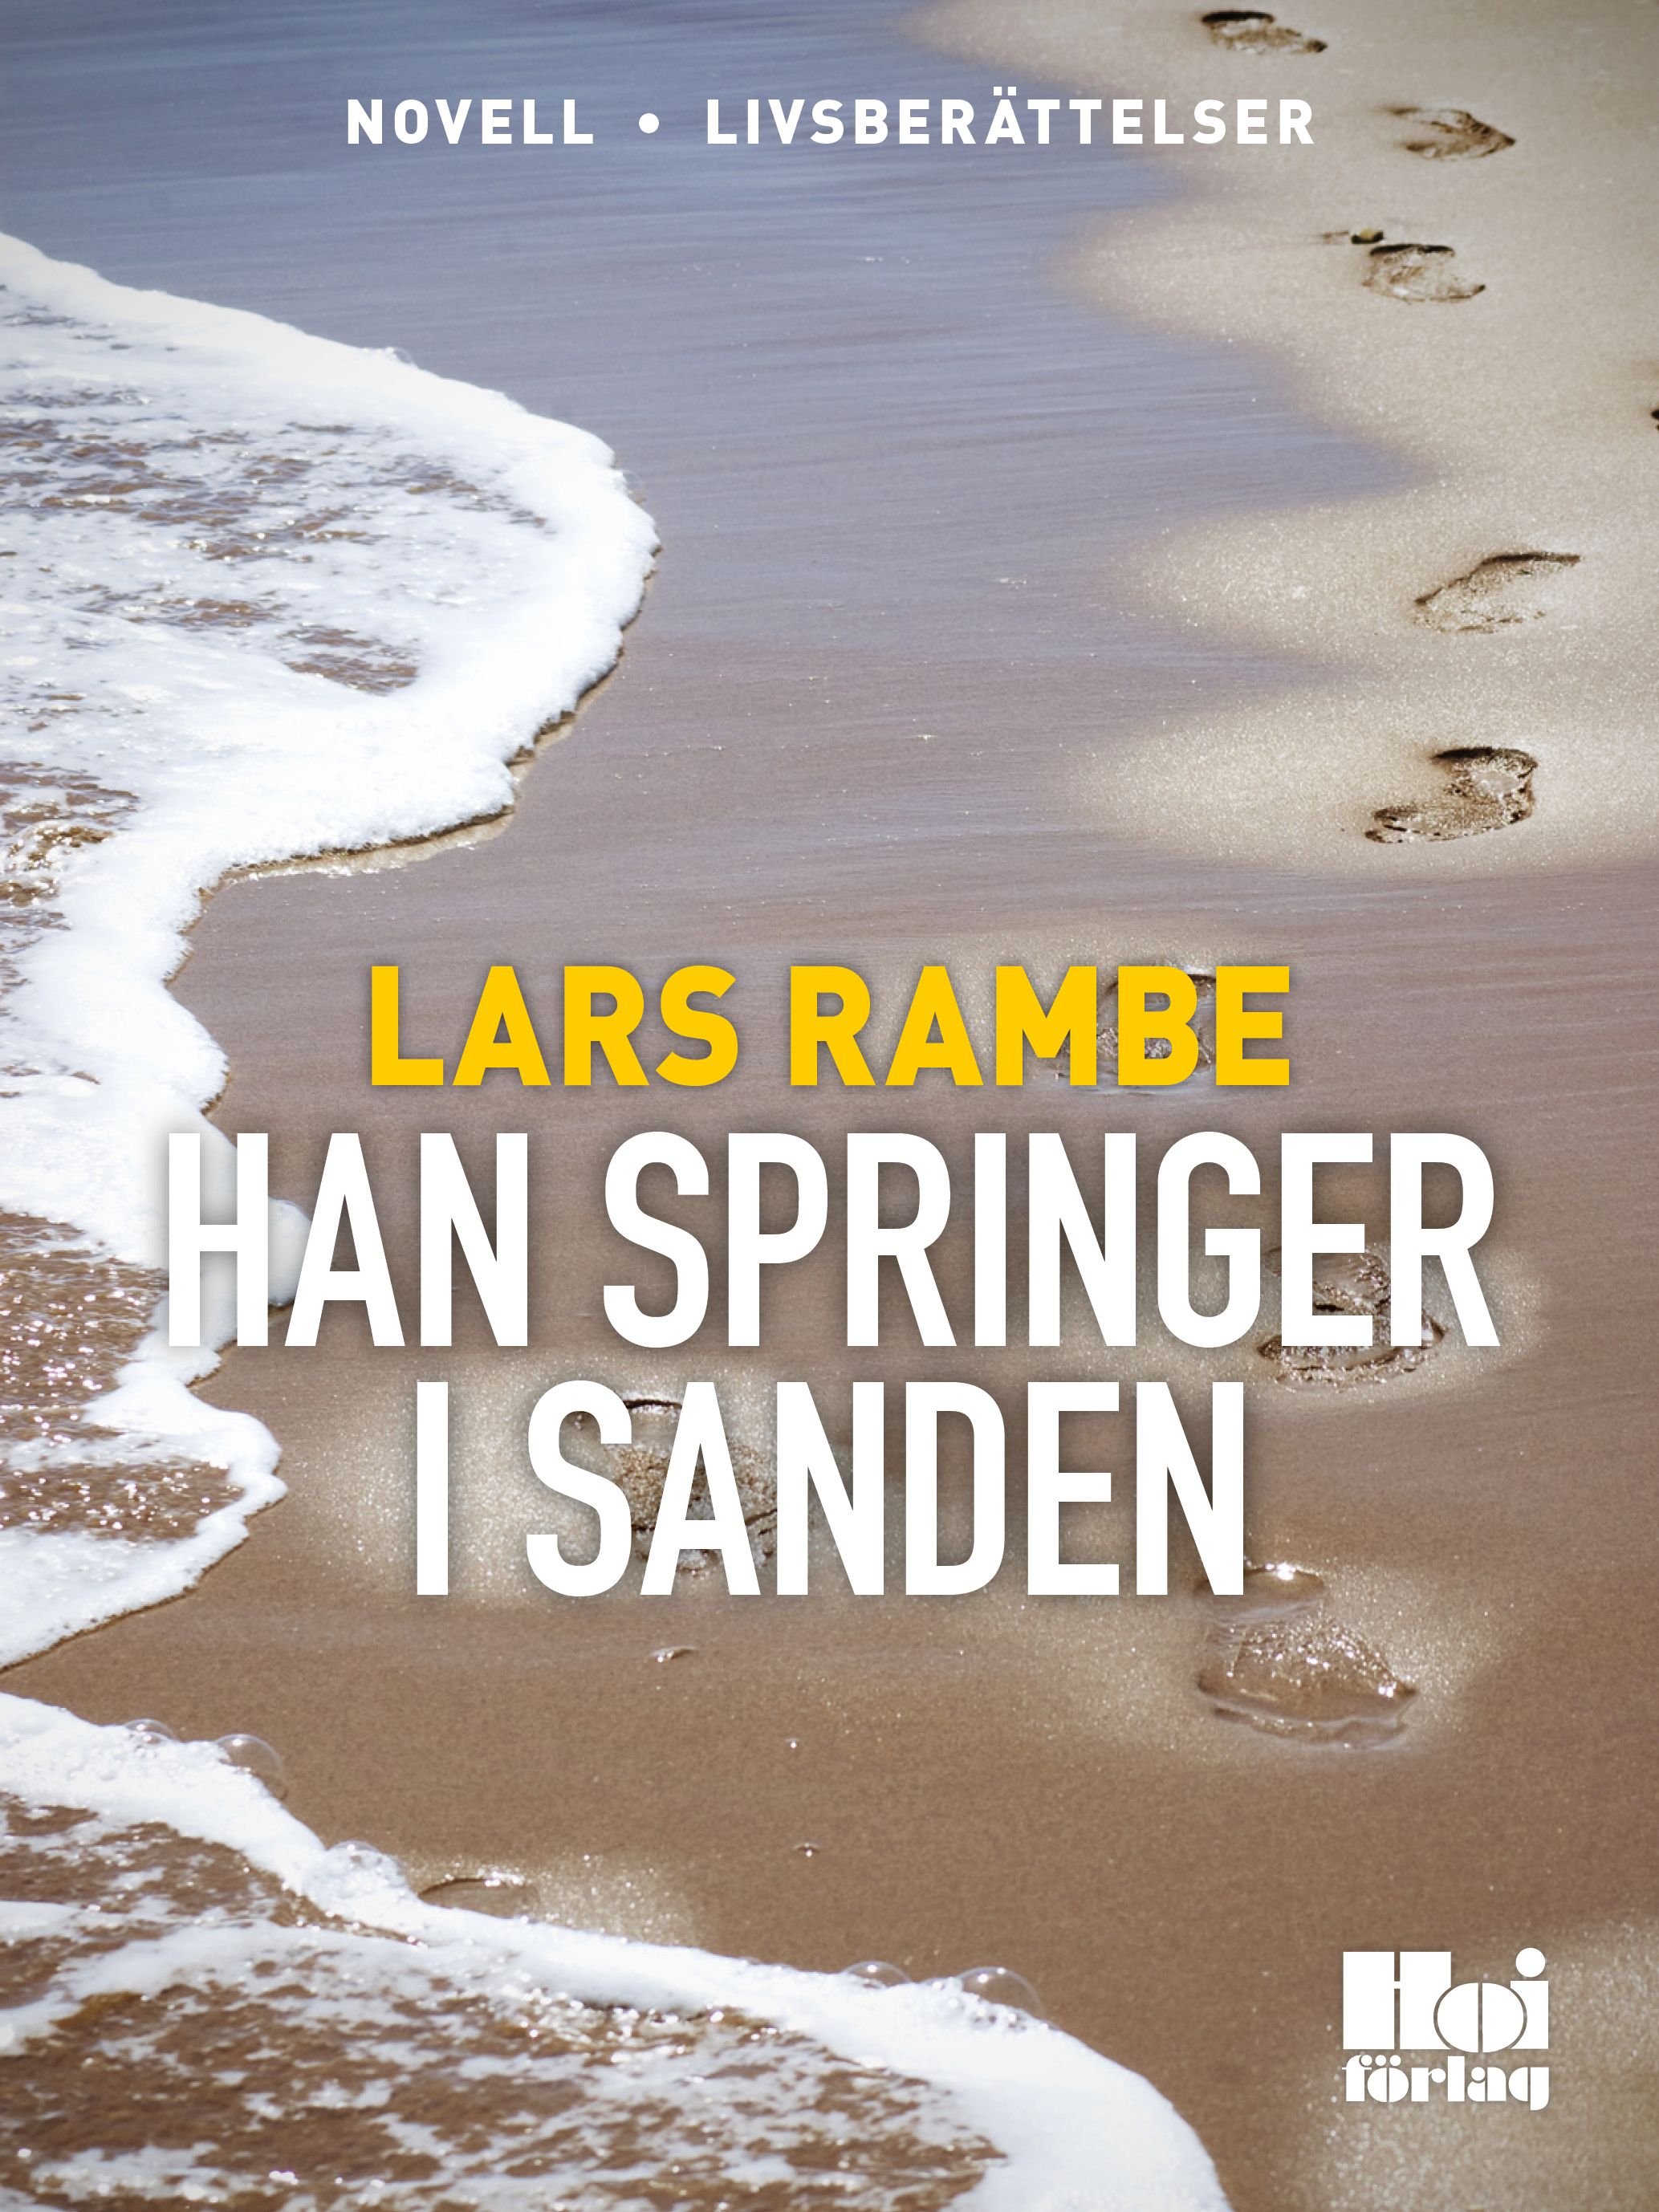 Han springer i sanden, eBook by Lars Rambe